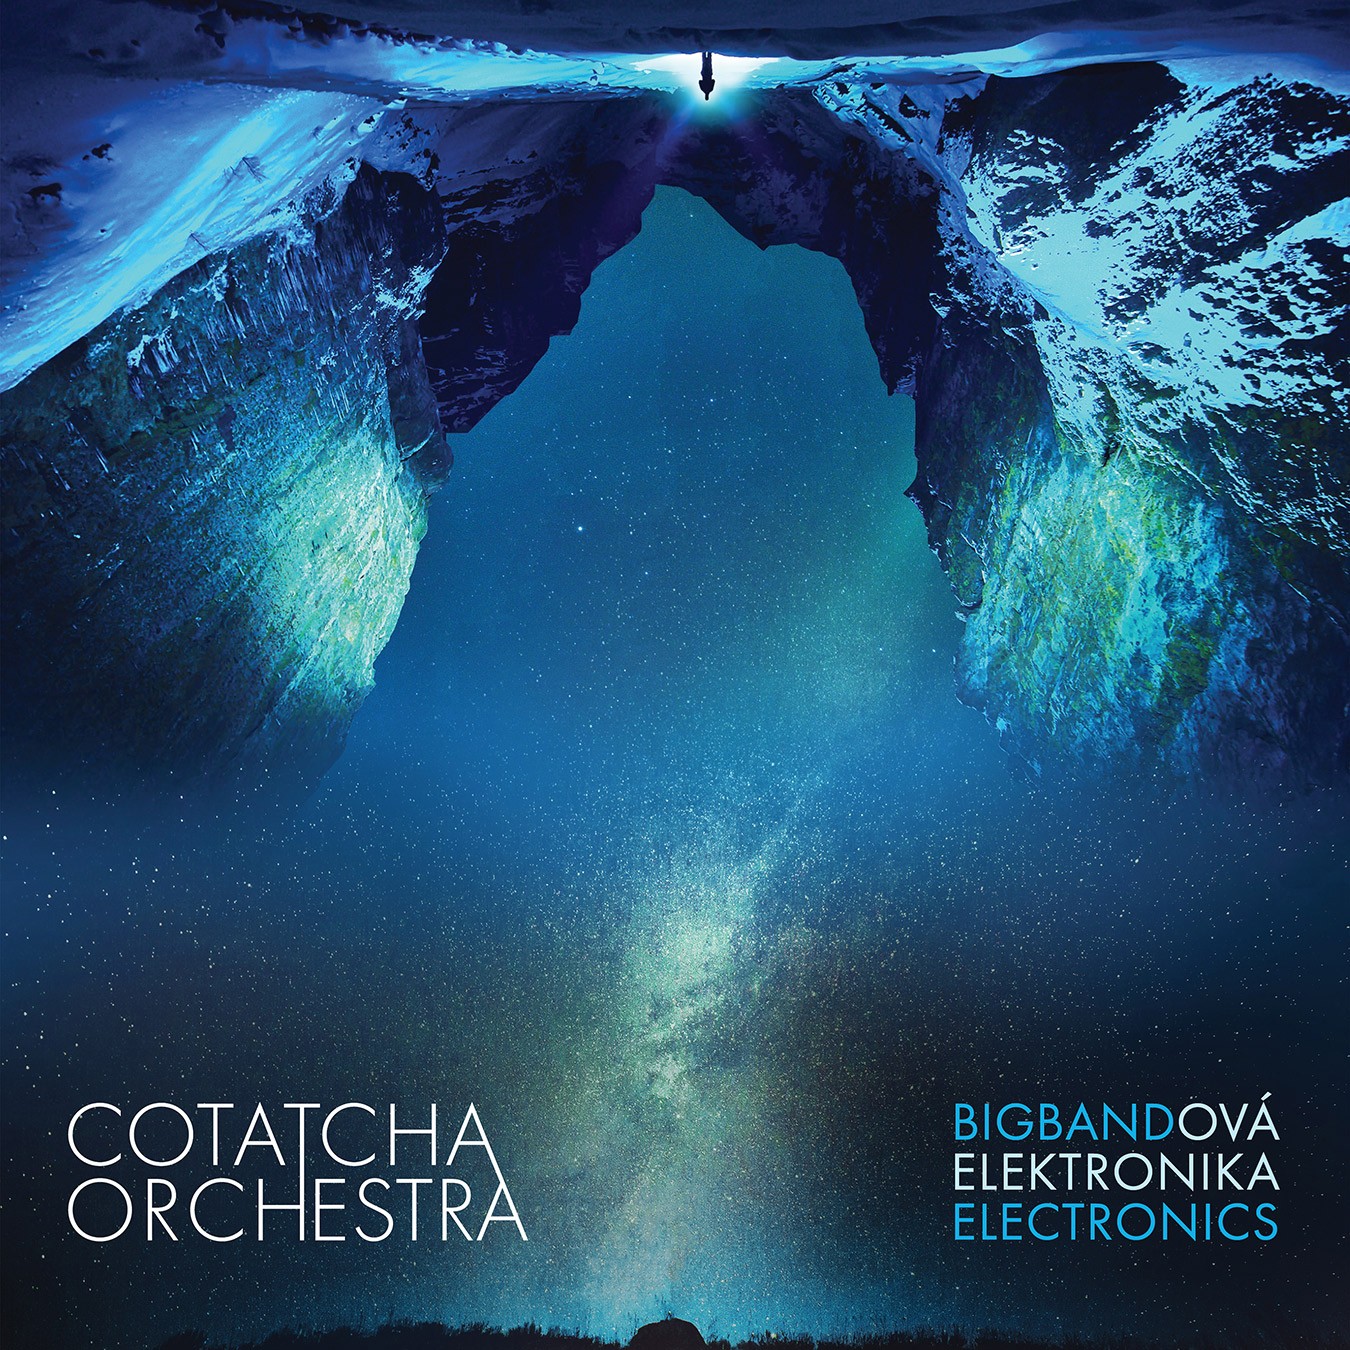 BIGBANDOVÁ ELEKTRONIKA/BIGBAND ELECTRONICS - album cover